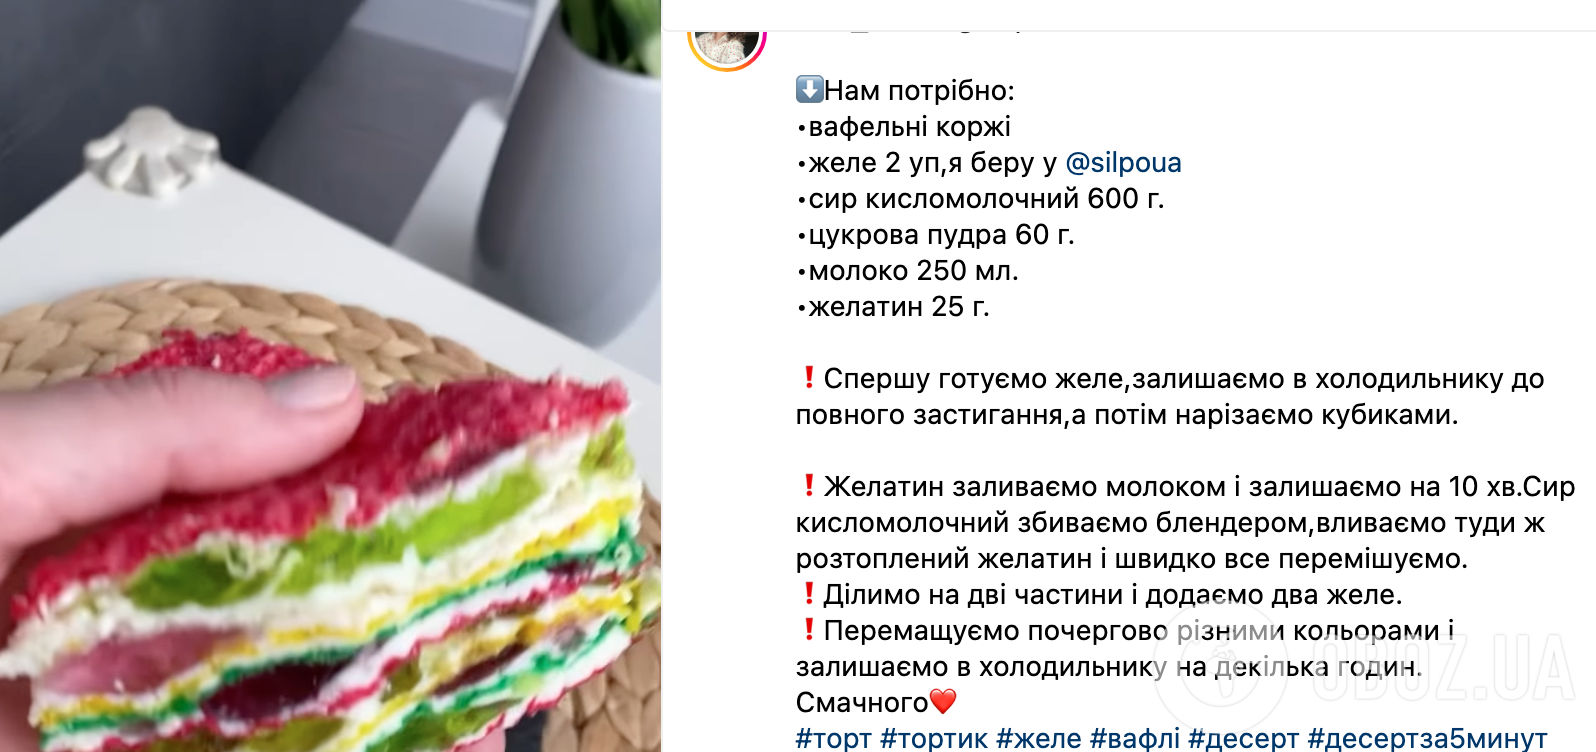 Рецепт торту